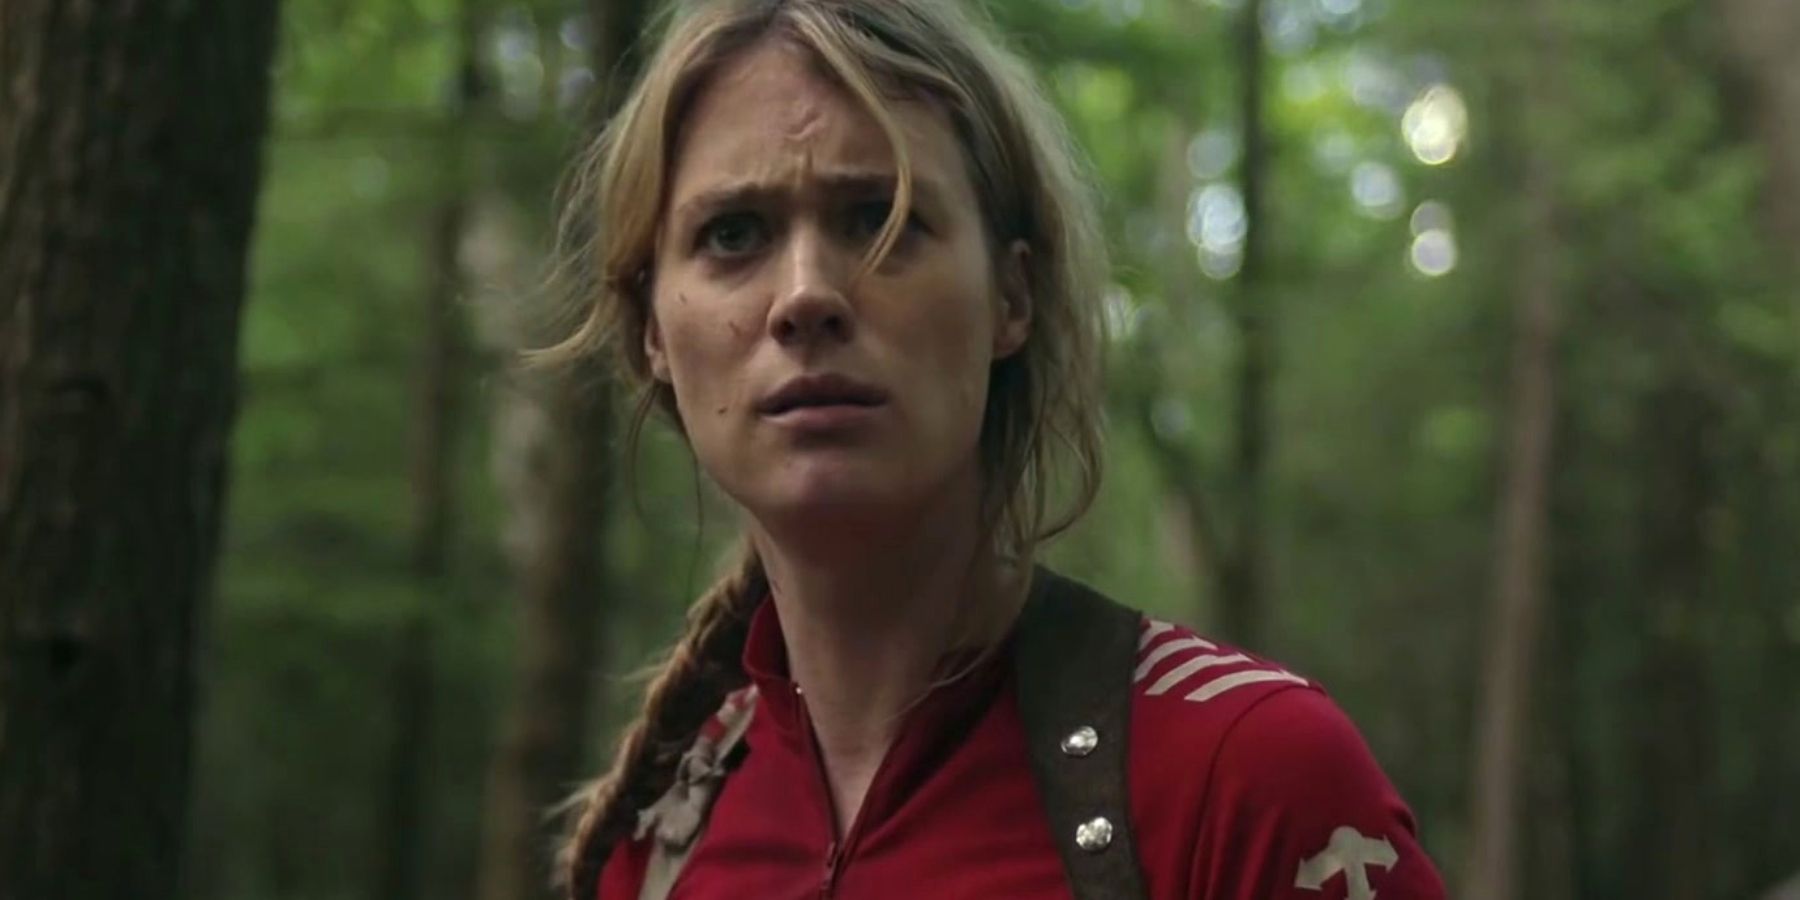 Mackenzie Davis as Kirsten looking upset in the forest in Station Eleven